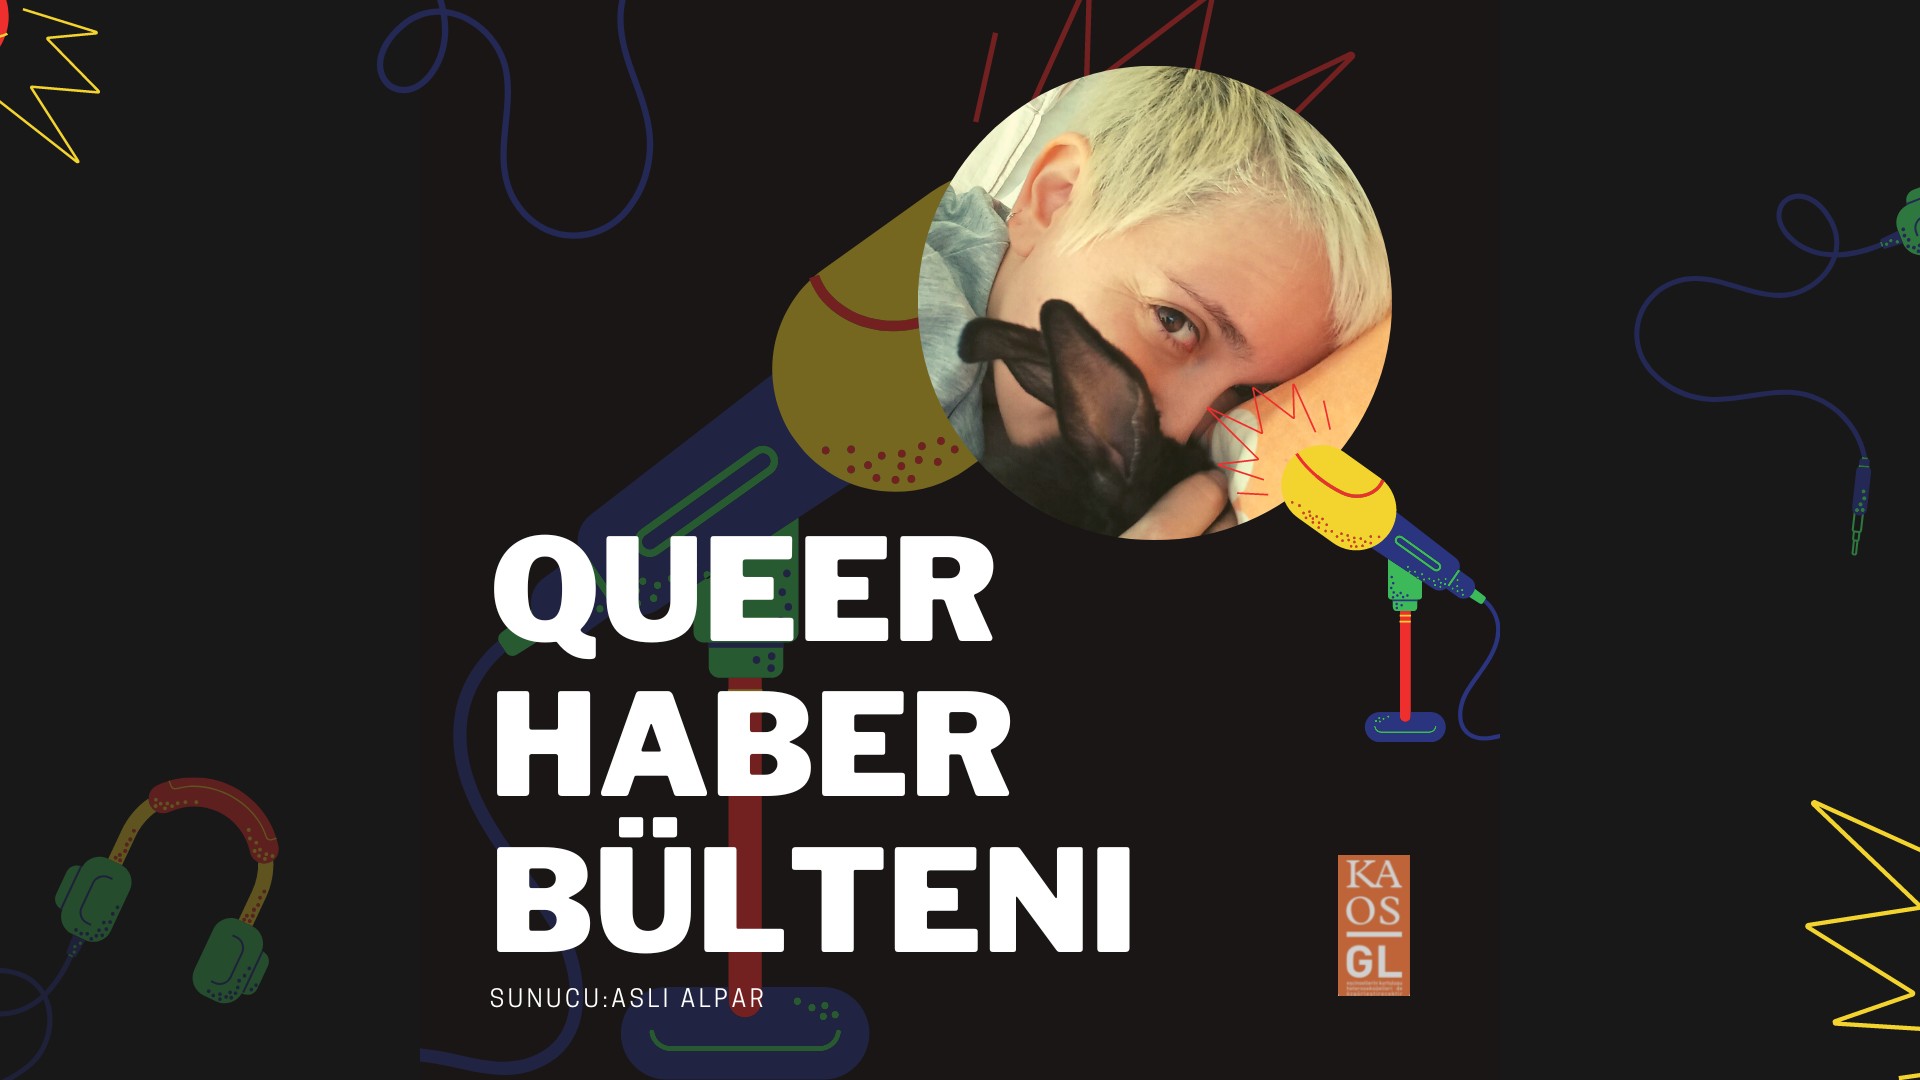 Podcast: Haziran 2022 Queer Haber Bülteni yayında! Kaos GL - LGBTİ+ Haber Portalı